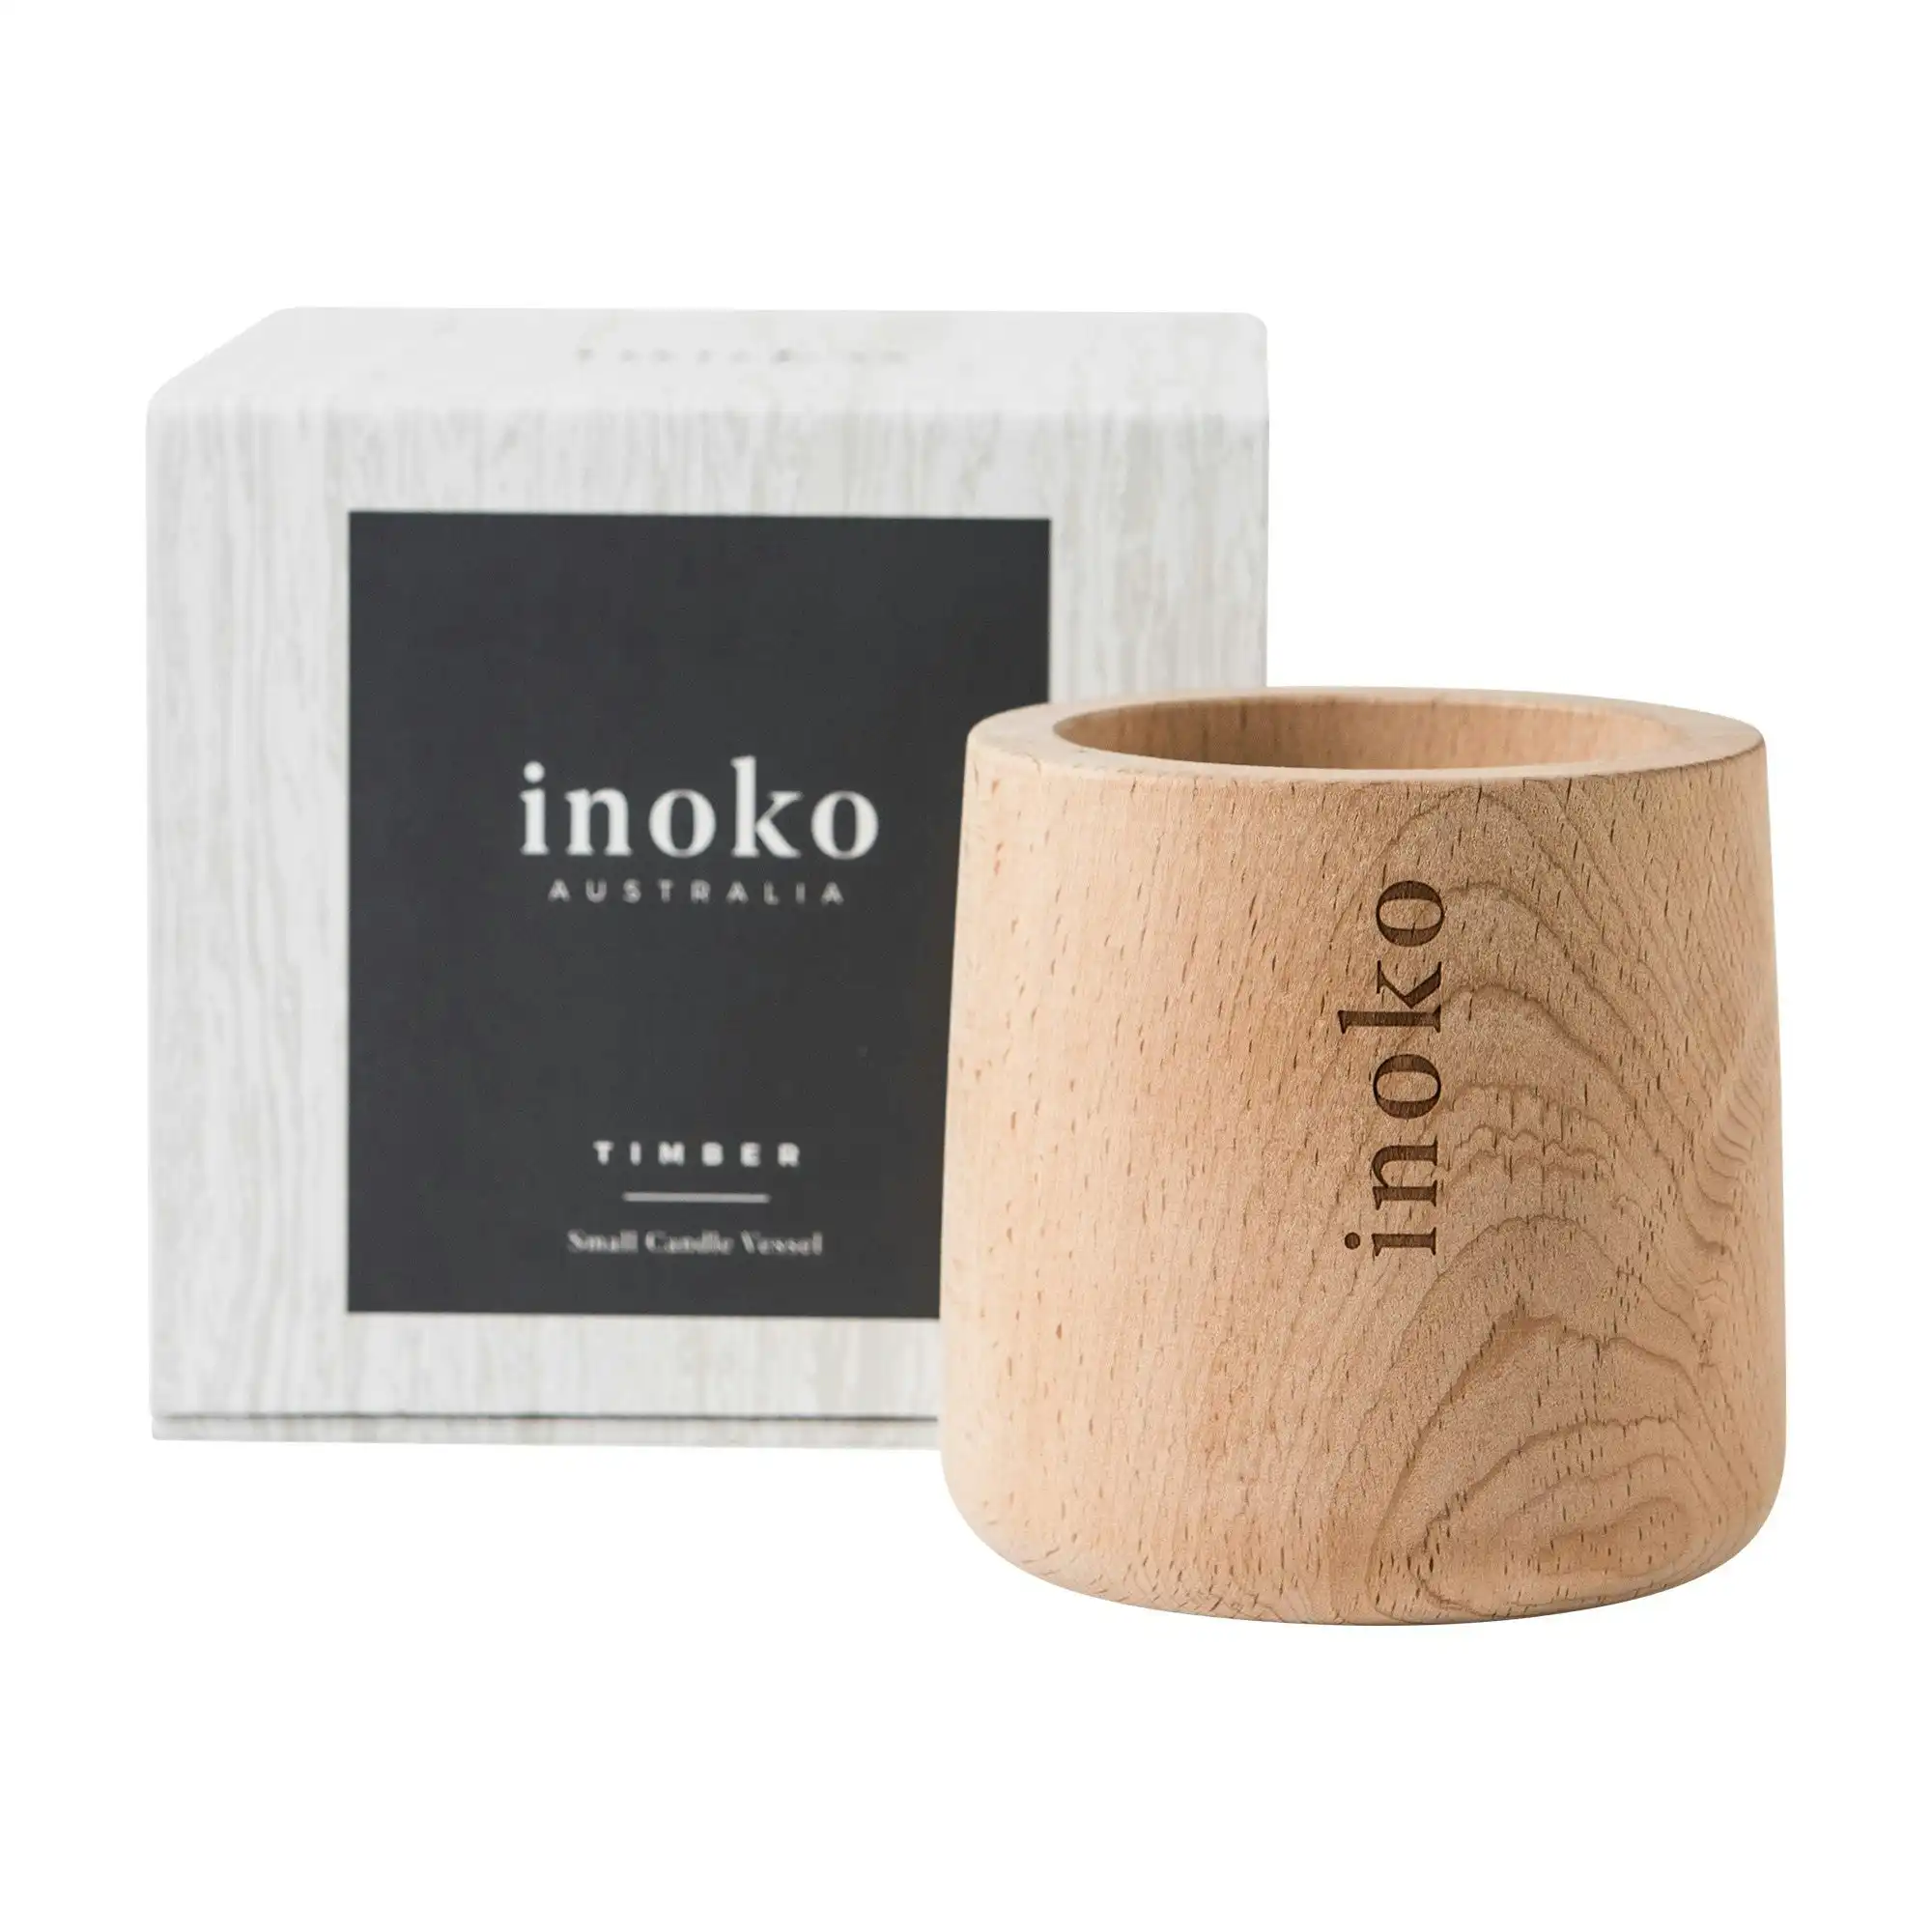 Inoko | Large Timber Candle Vessel